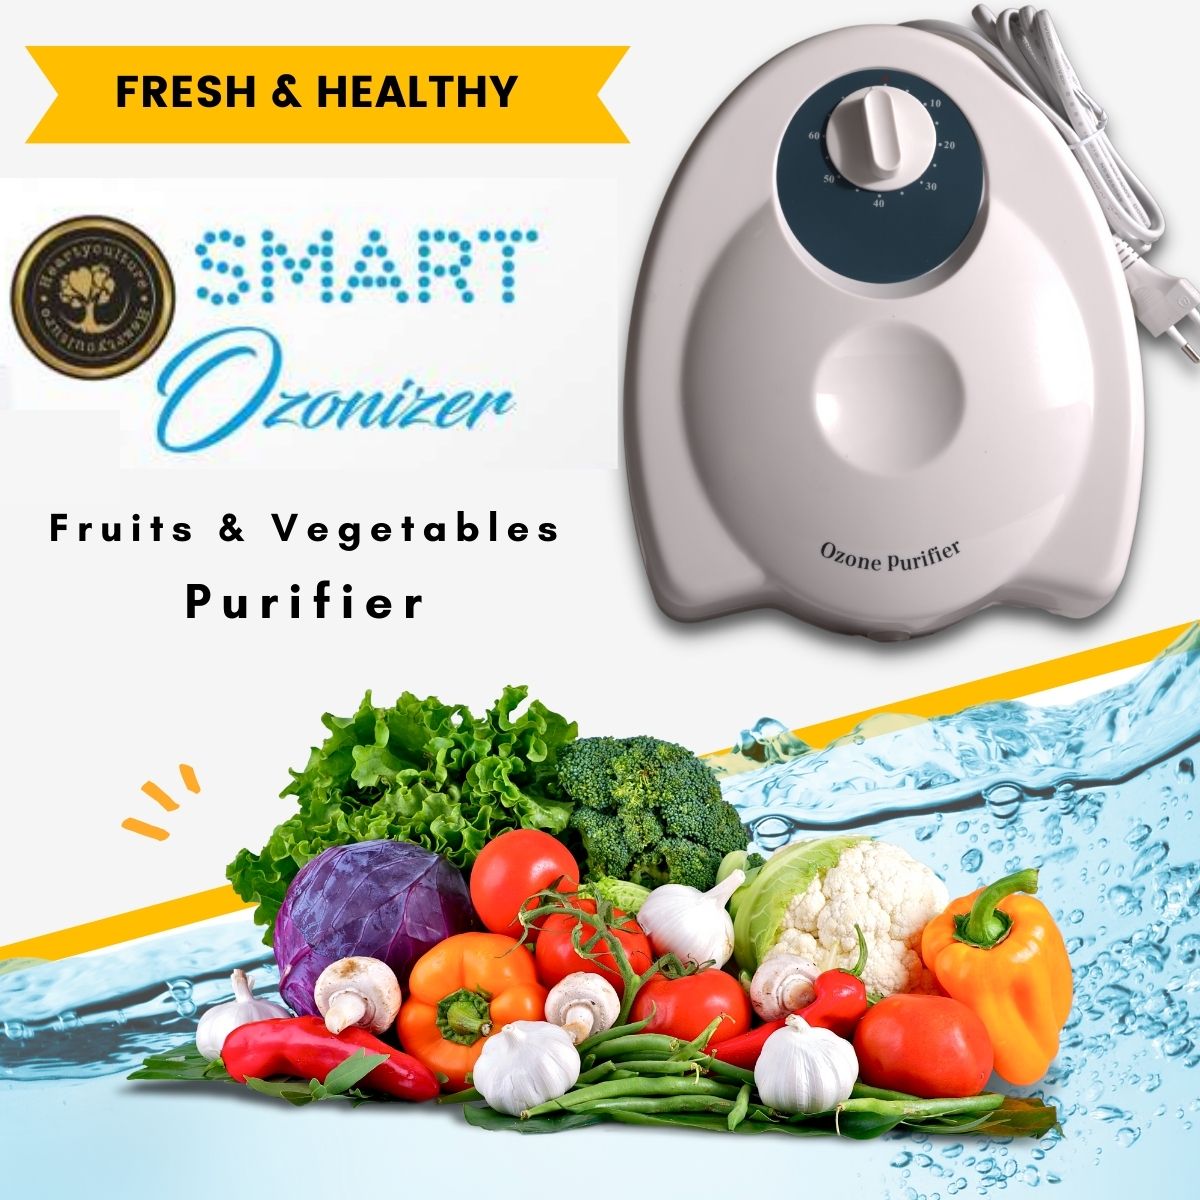 Heartyculture's Smart Portable Multifunctional Ozonizer - hfnl!fe